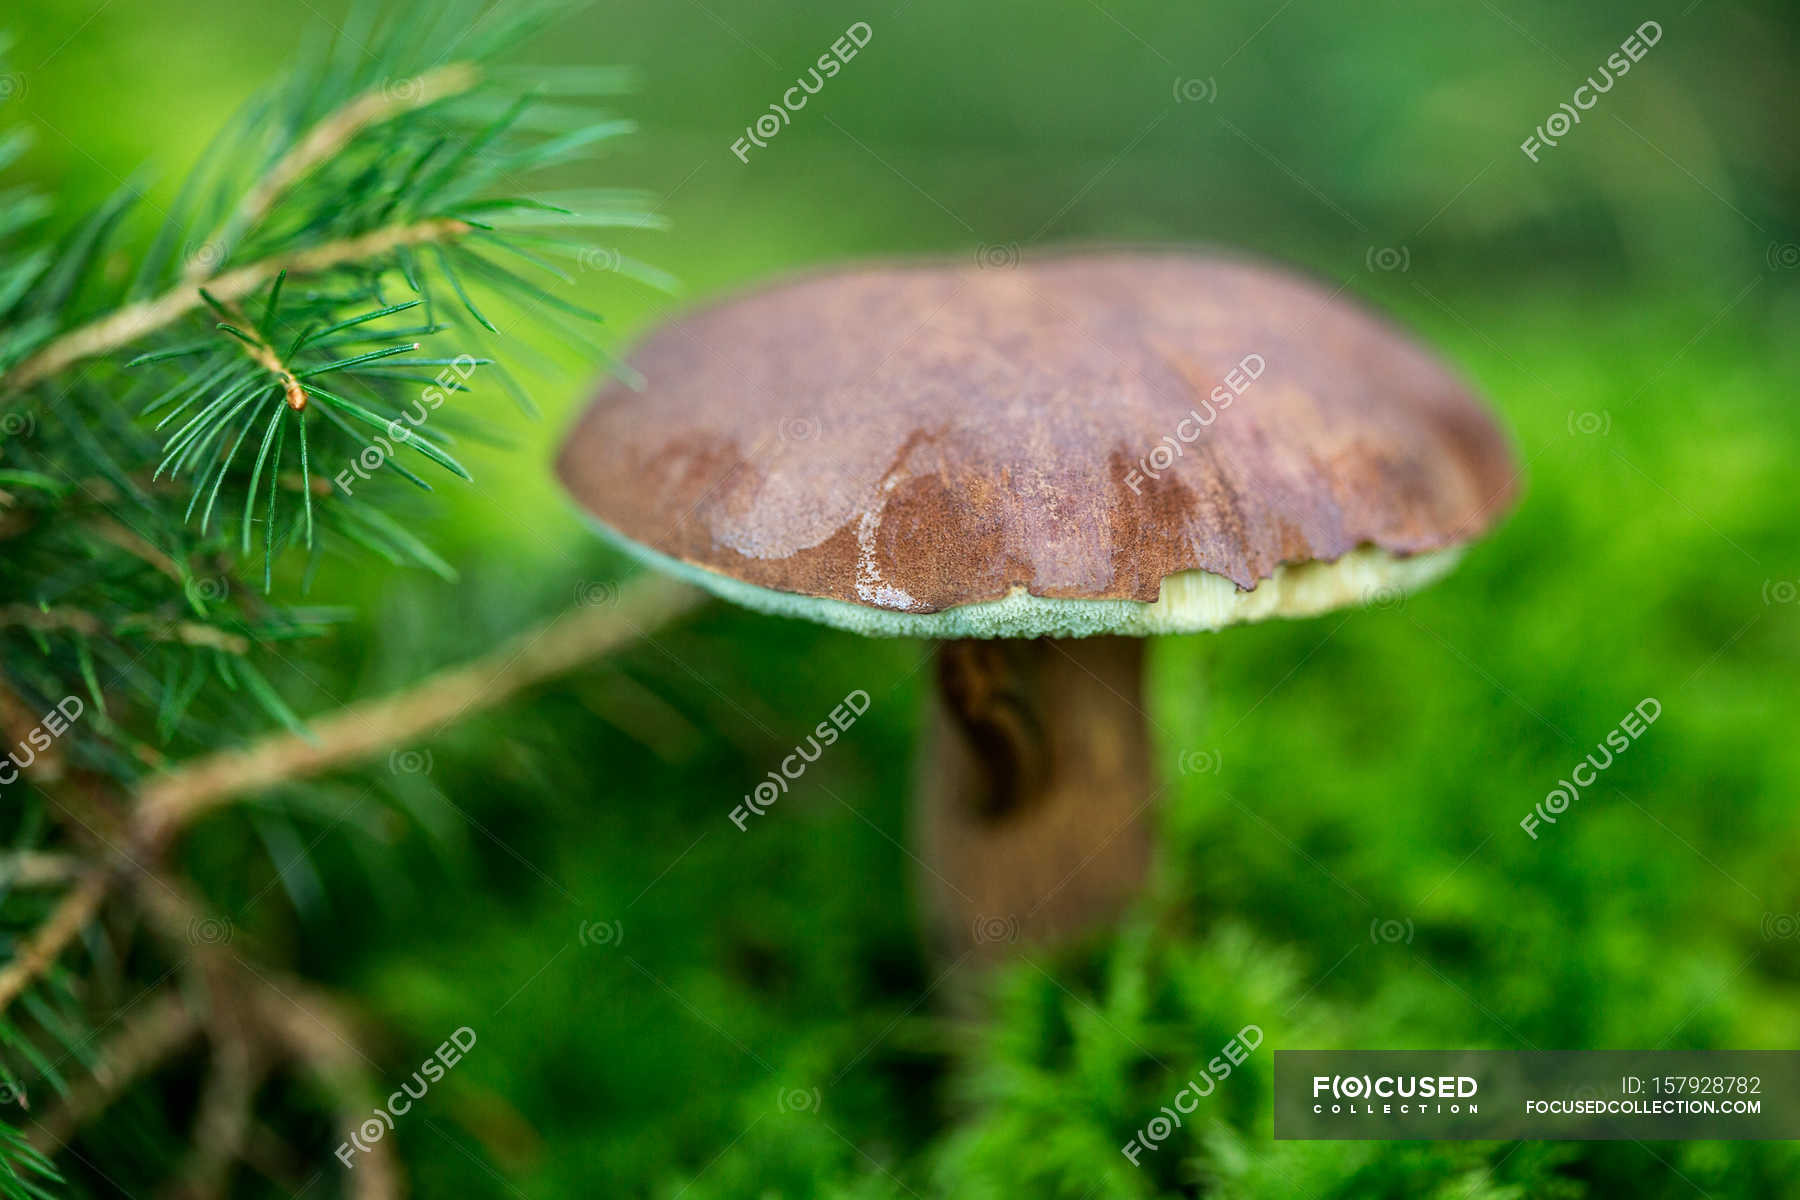 Growing mushroom, close-up — Stock Photo | #157928782